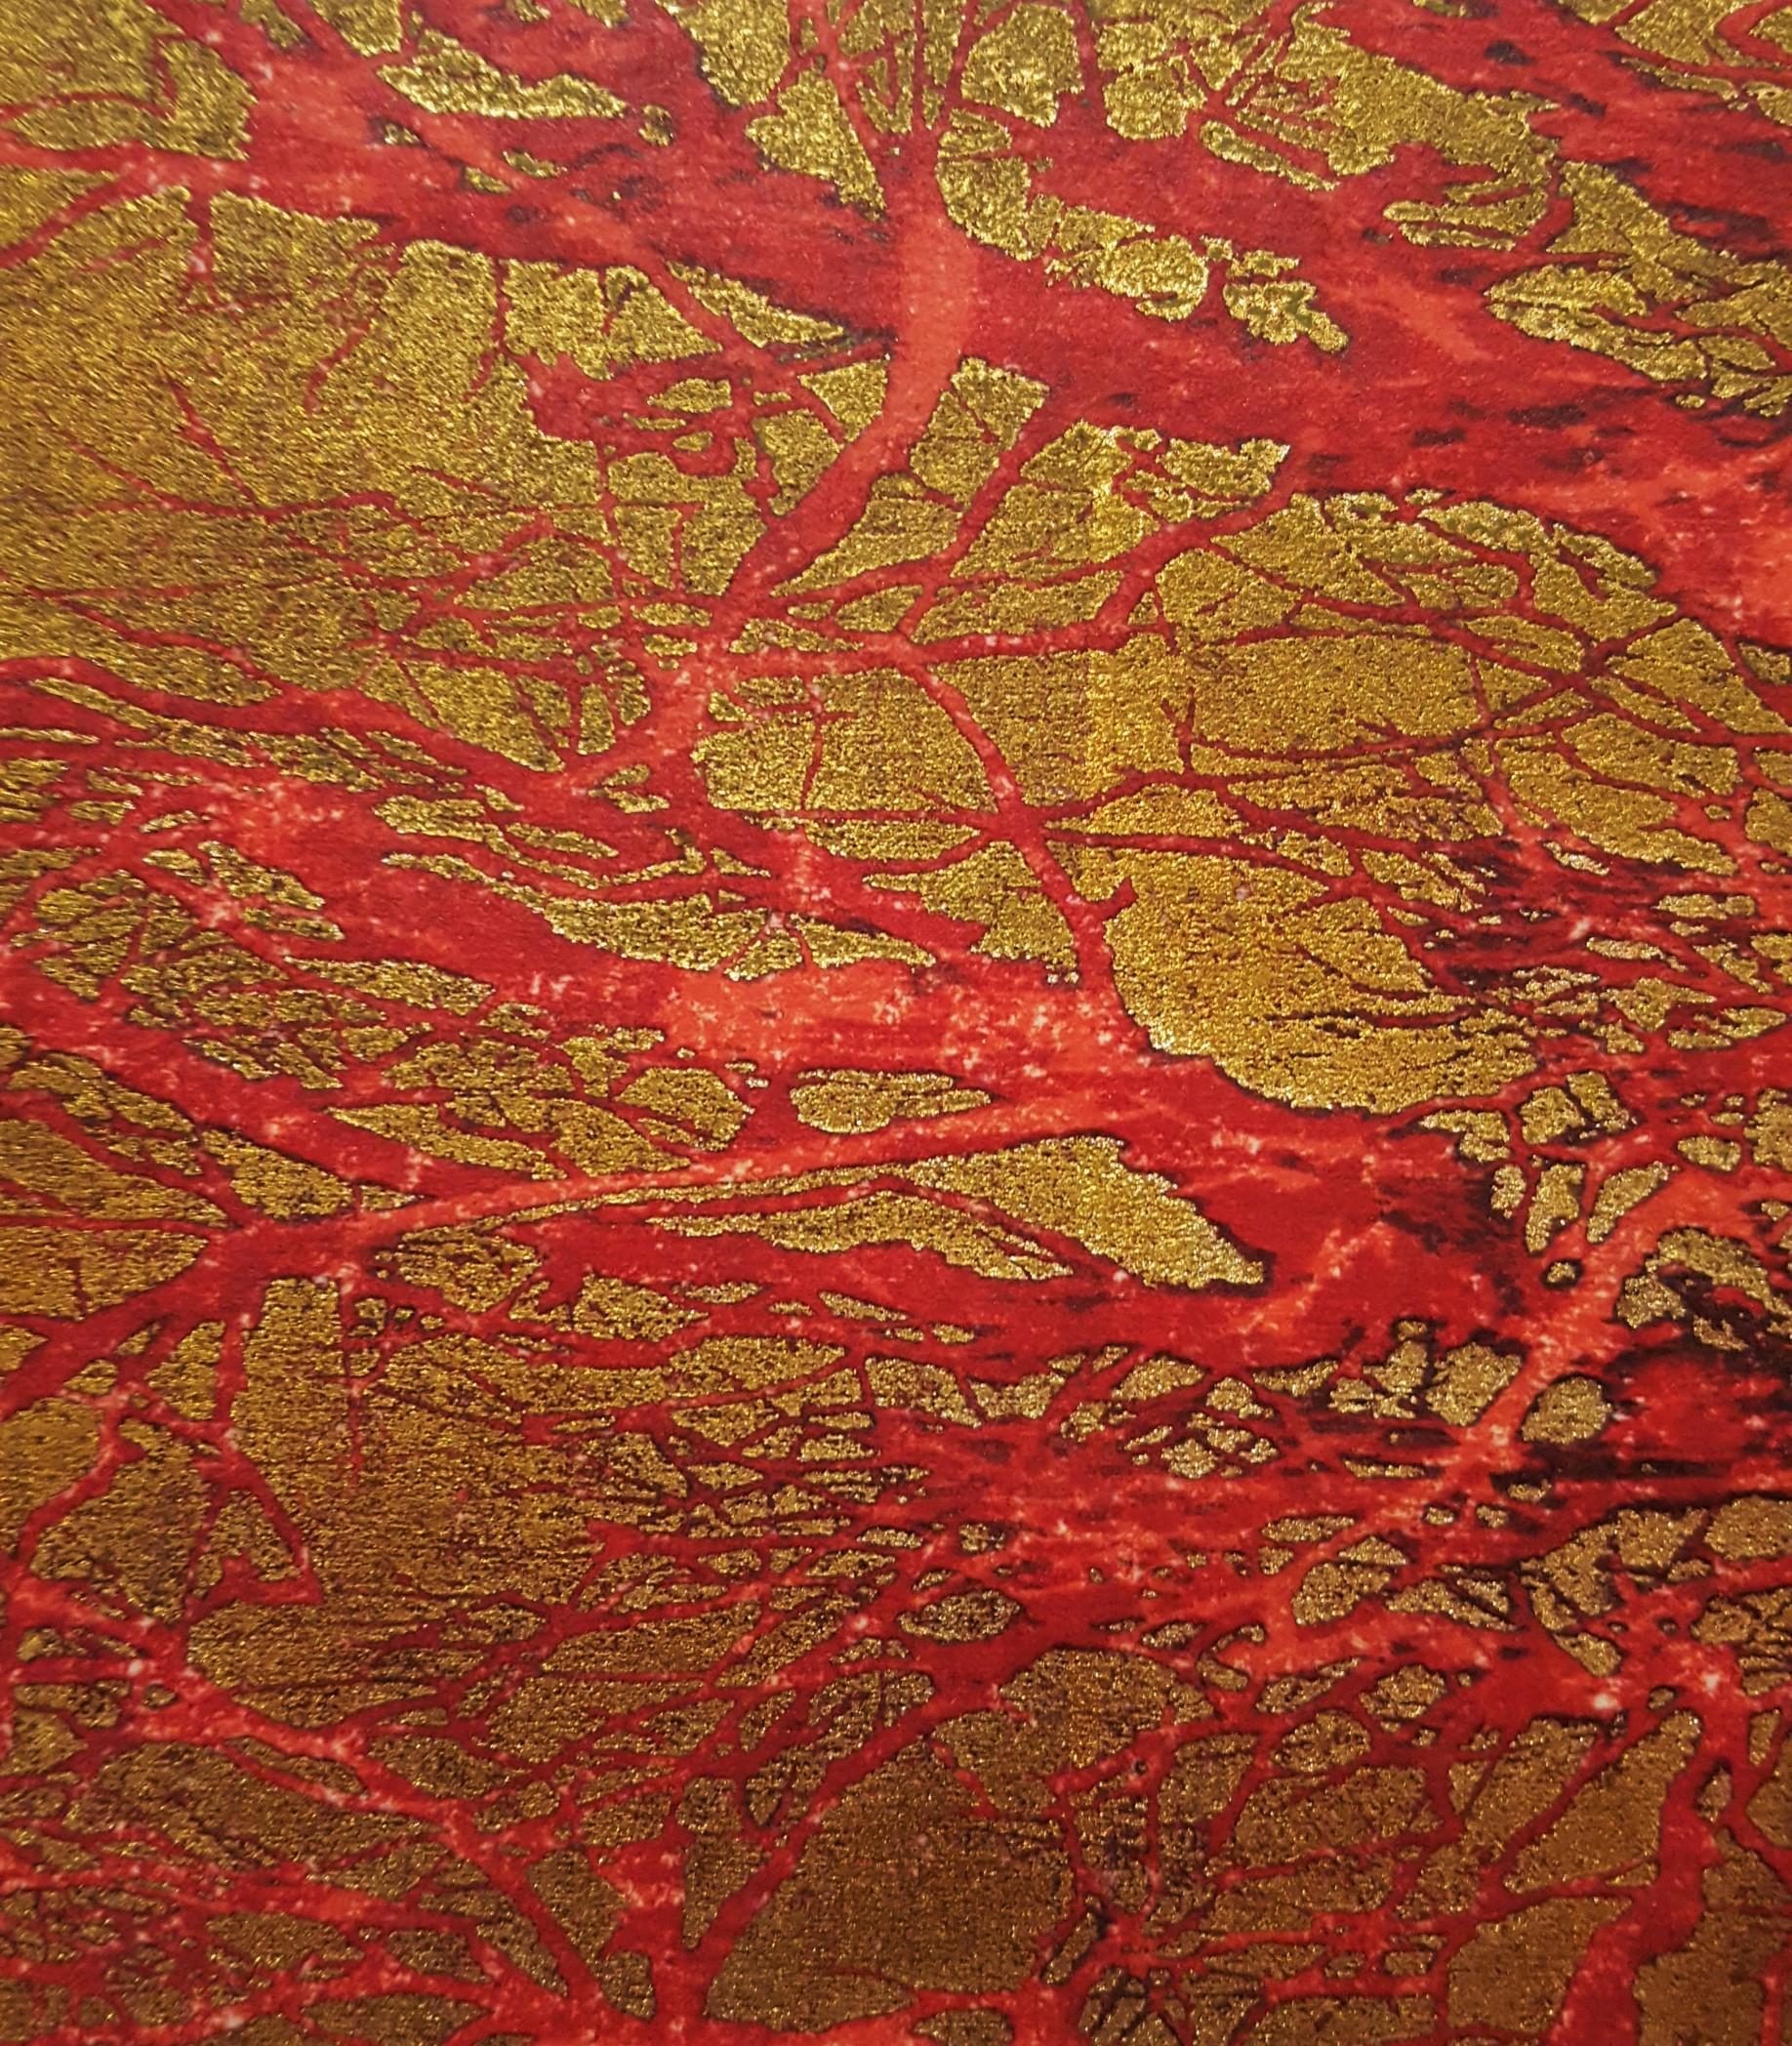 Red Branches (Akai eda) 5